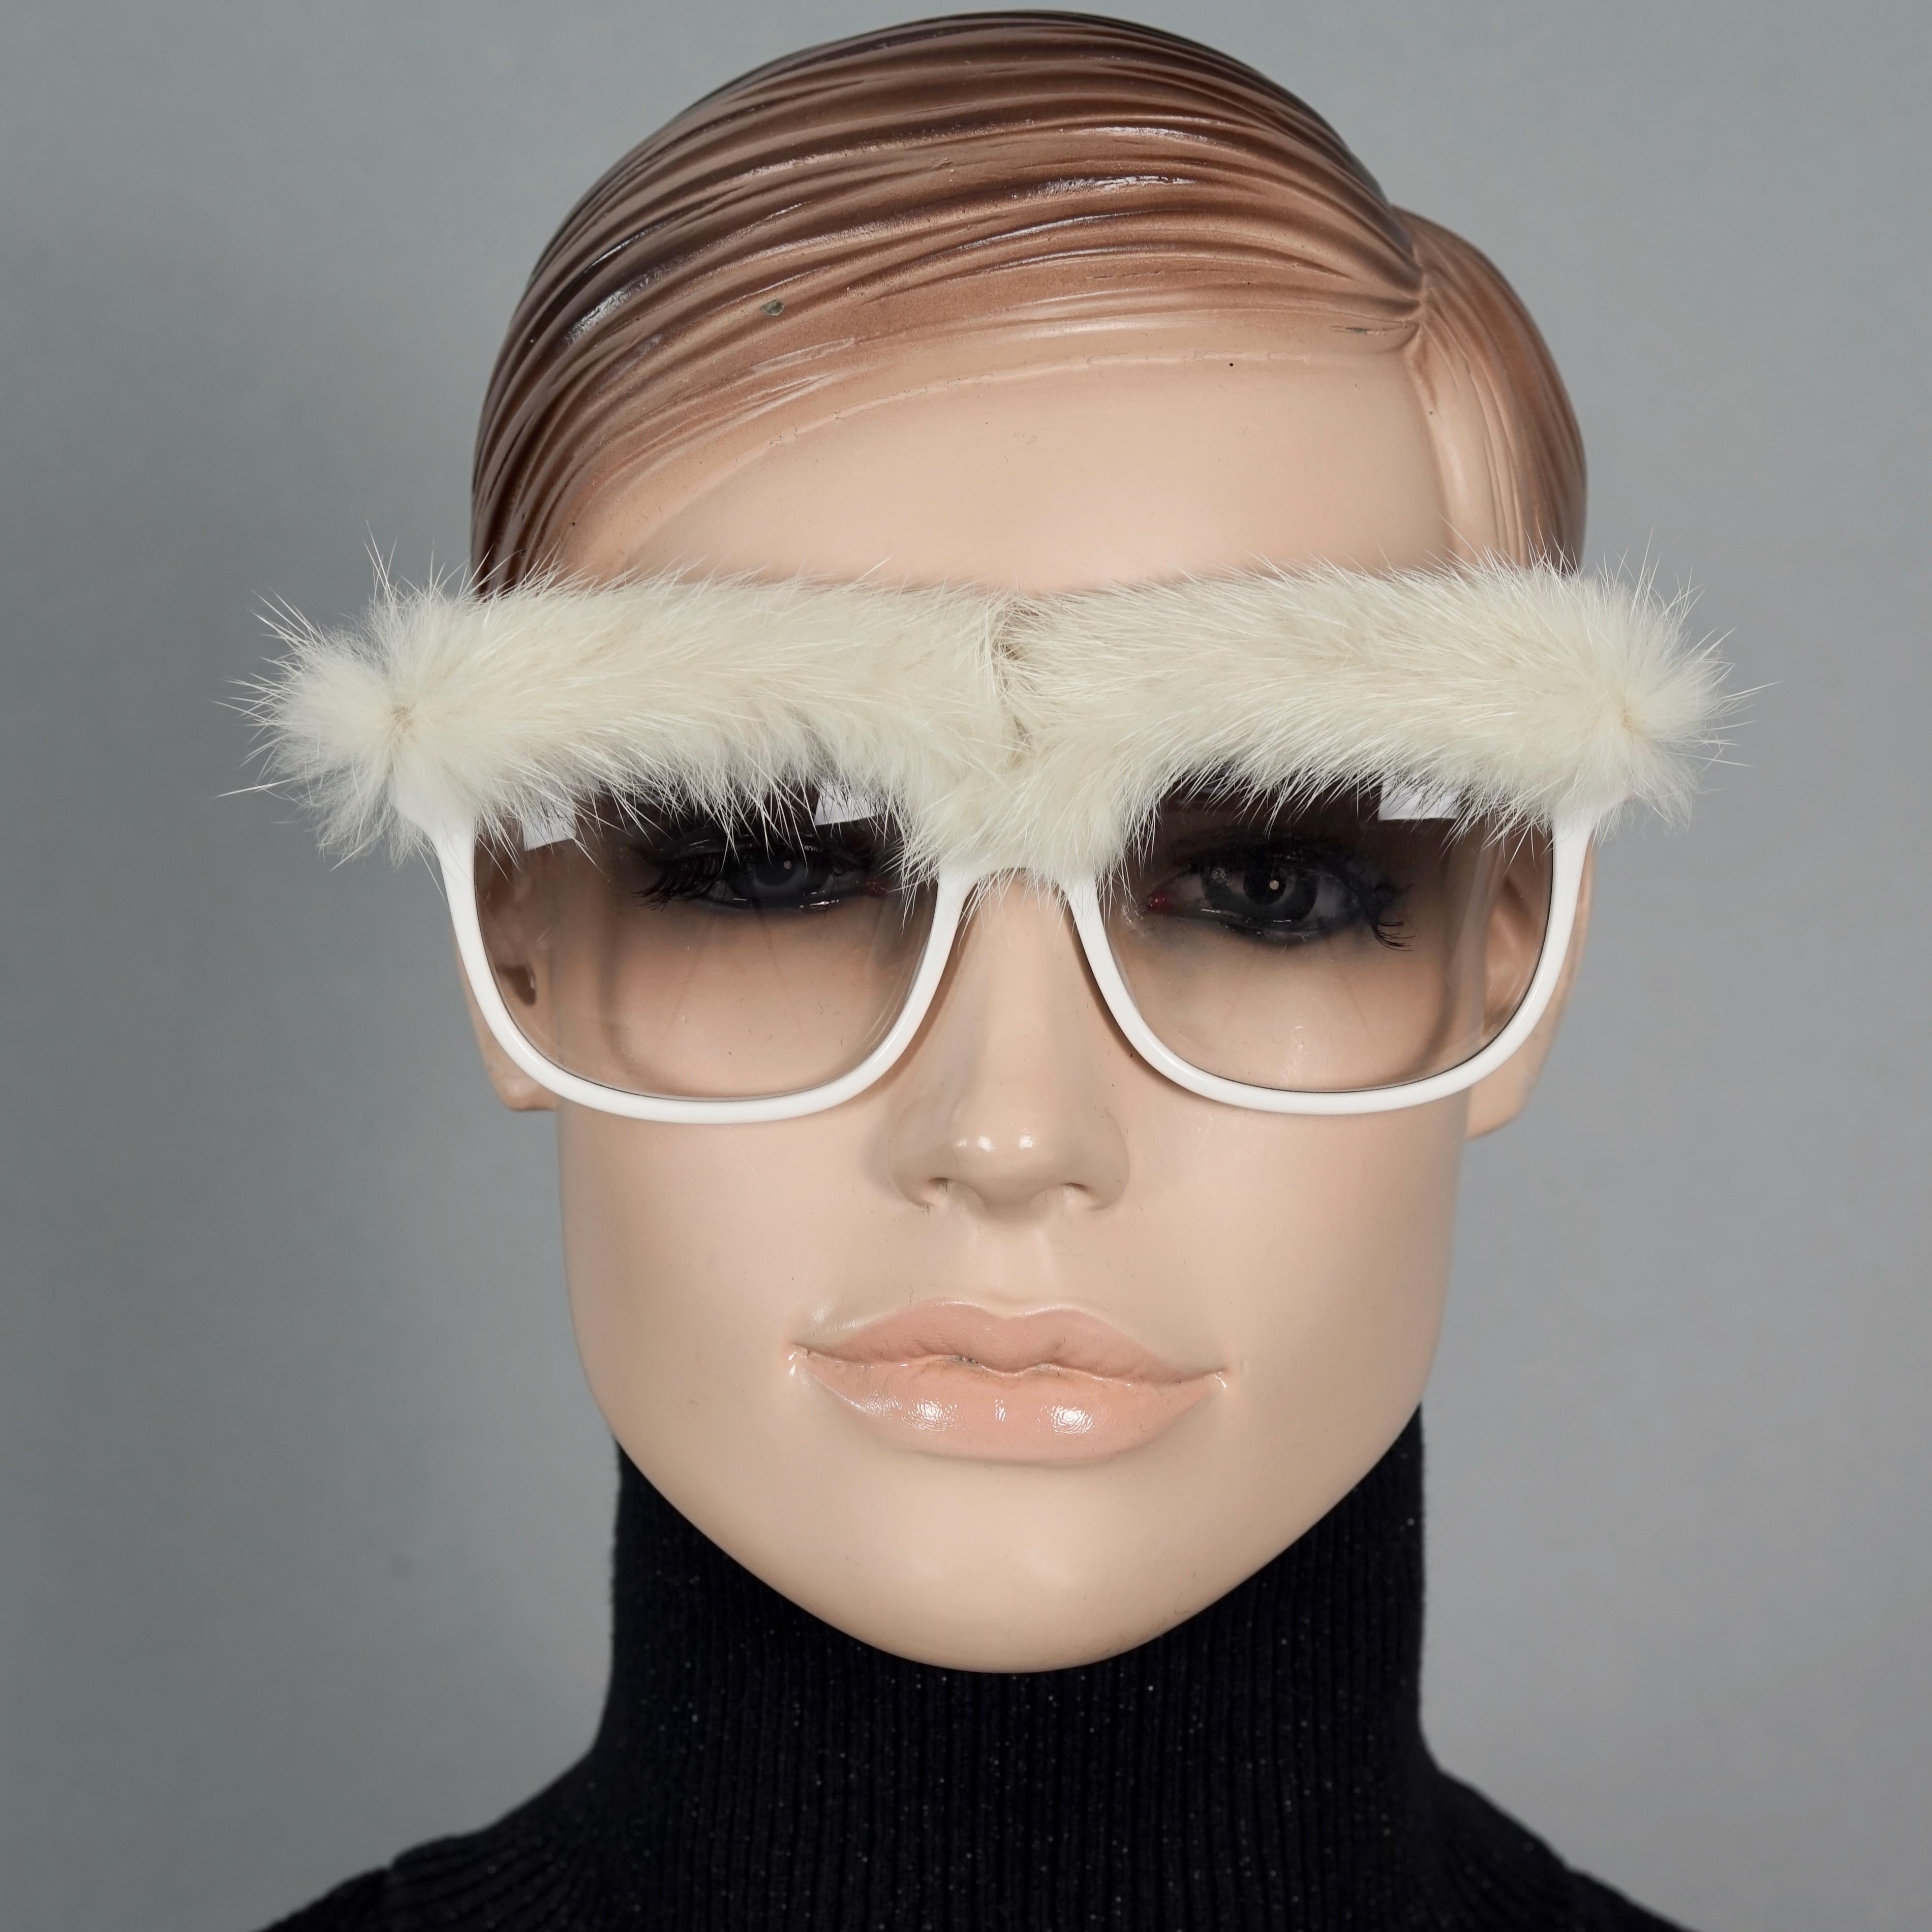 Vintage EMMANUELLE KHANH PARIS Fur Brow Sunglasses

Measurements:
Vertical Height: 2.75 inches (7 cm)
Horizontal Width: 5.90 inches  (15 cm)
Temple Length: 5.35 inches  (13.6 cm)

Features:
- 100% Authentic EMMANUELLE KHANH. 
- Dramatic fur brow top